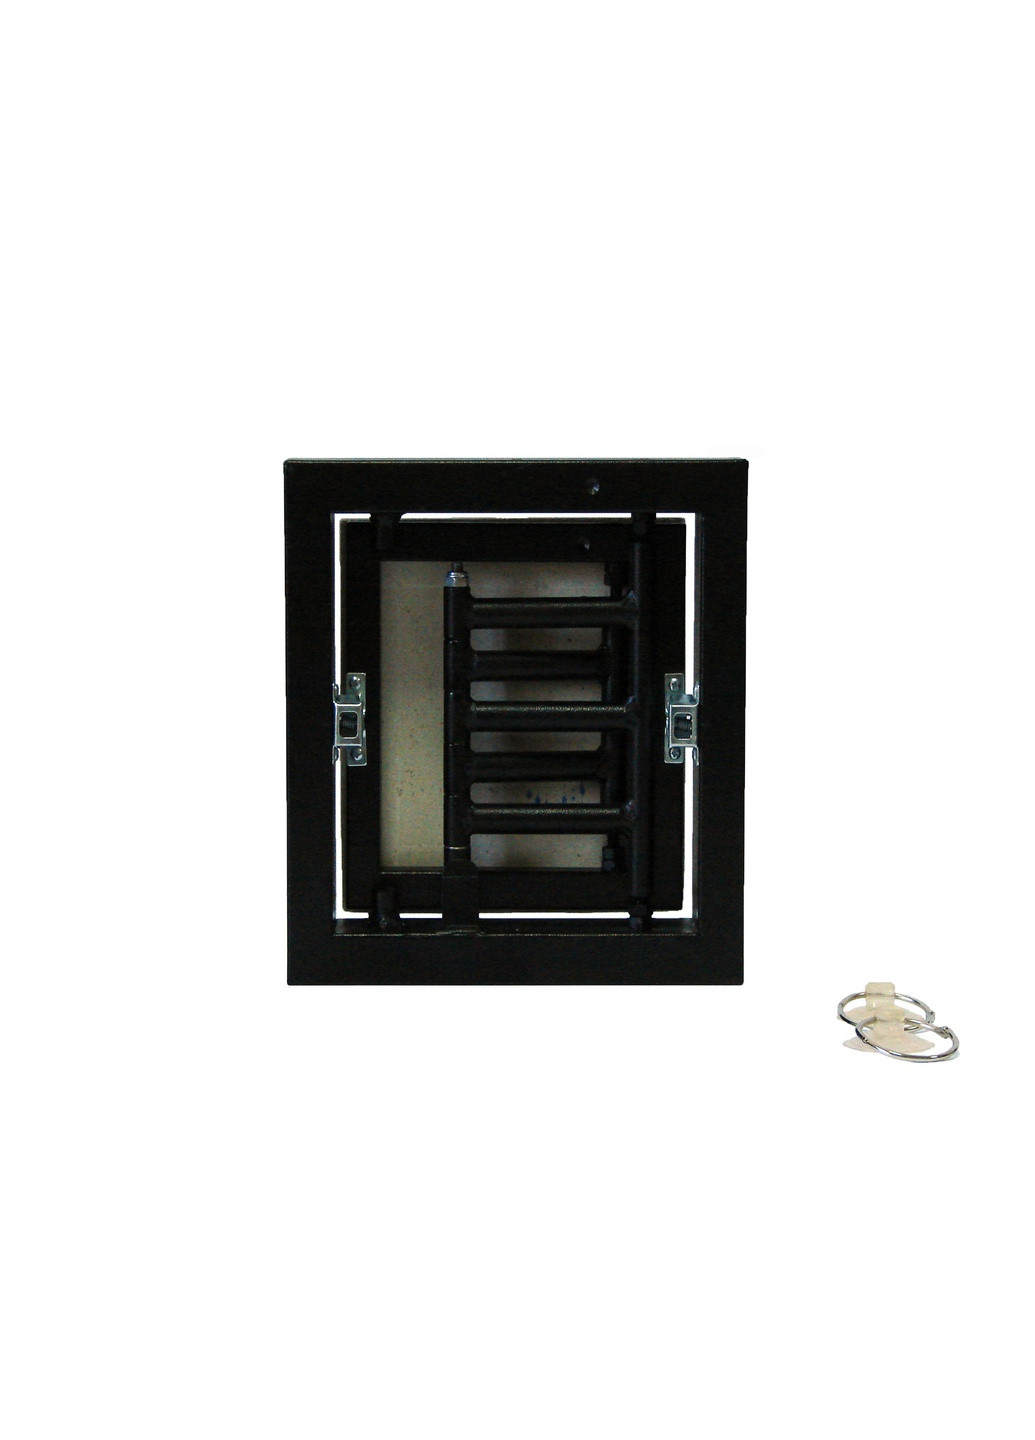 Ревизионный люк скрытого монтажа под плитку фронтальнораспашного типа 200x250 ревизионная дверца для плитки (1210) S-Dom (266339642)